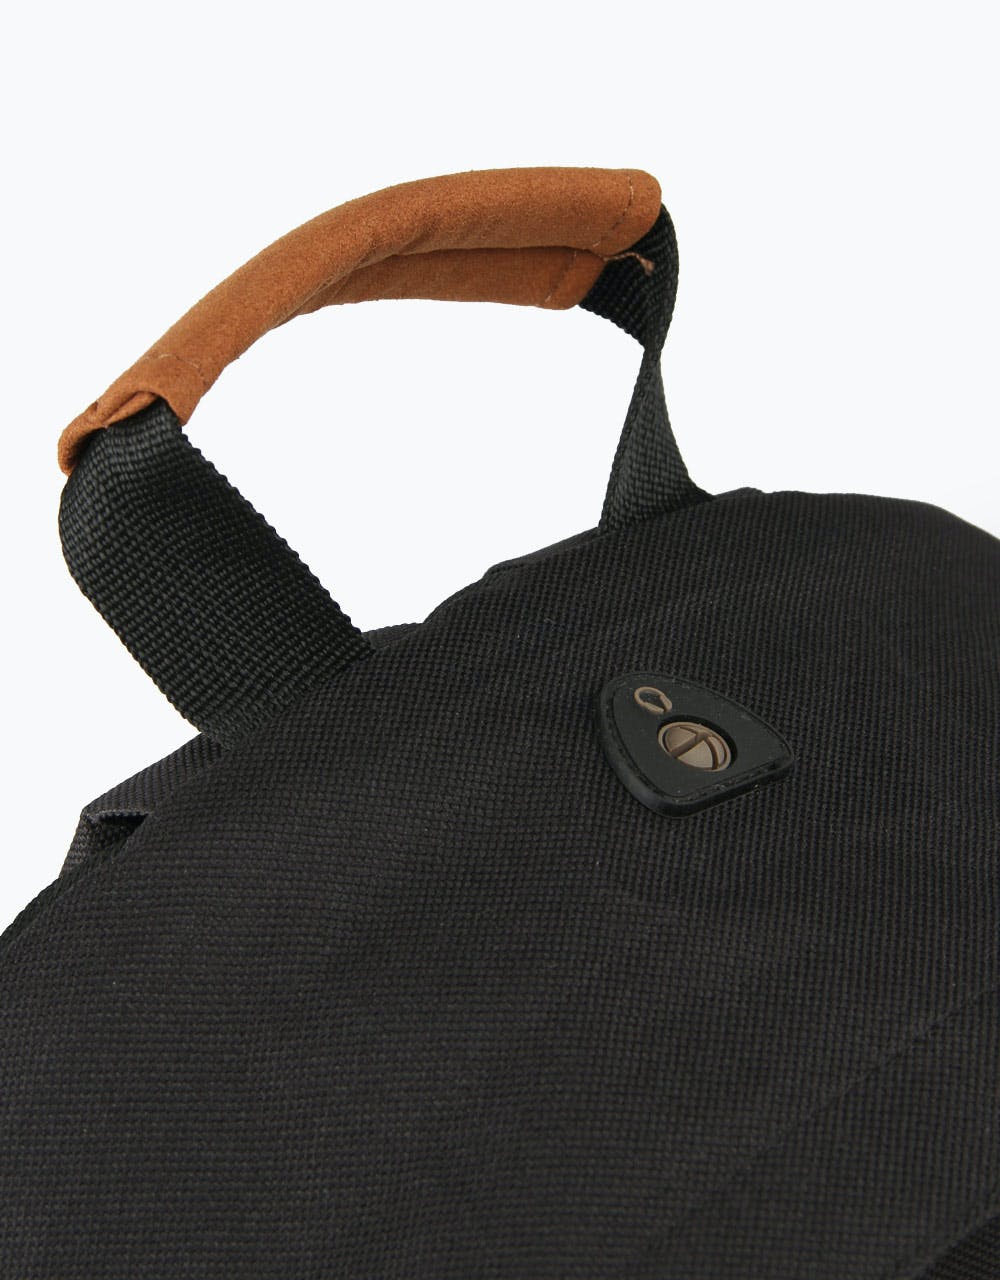 Mi-Pac Custom Backpack - Black/Leopard